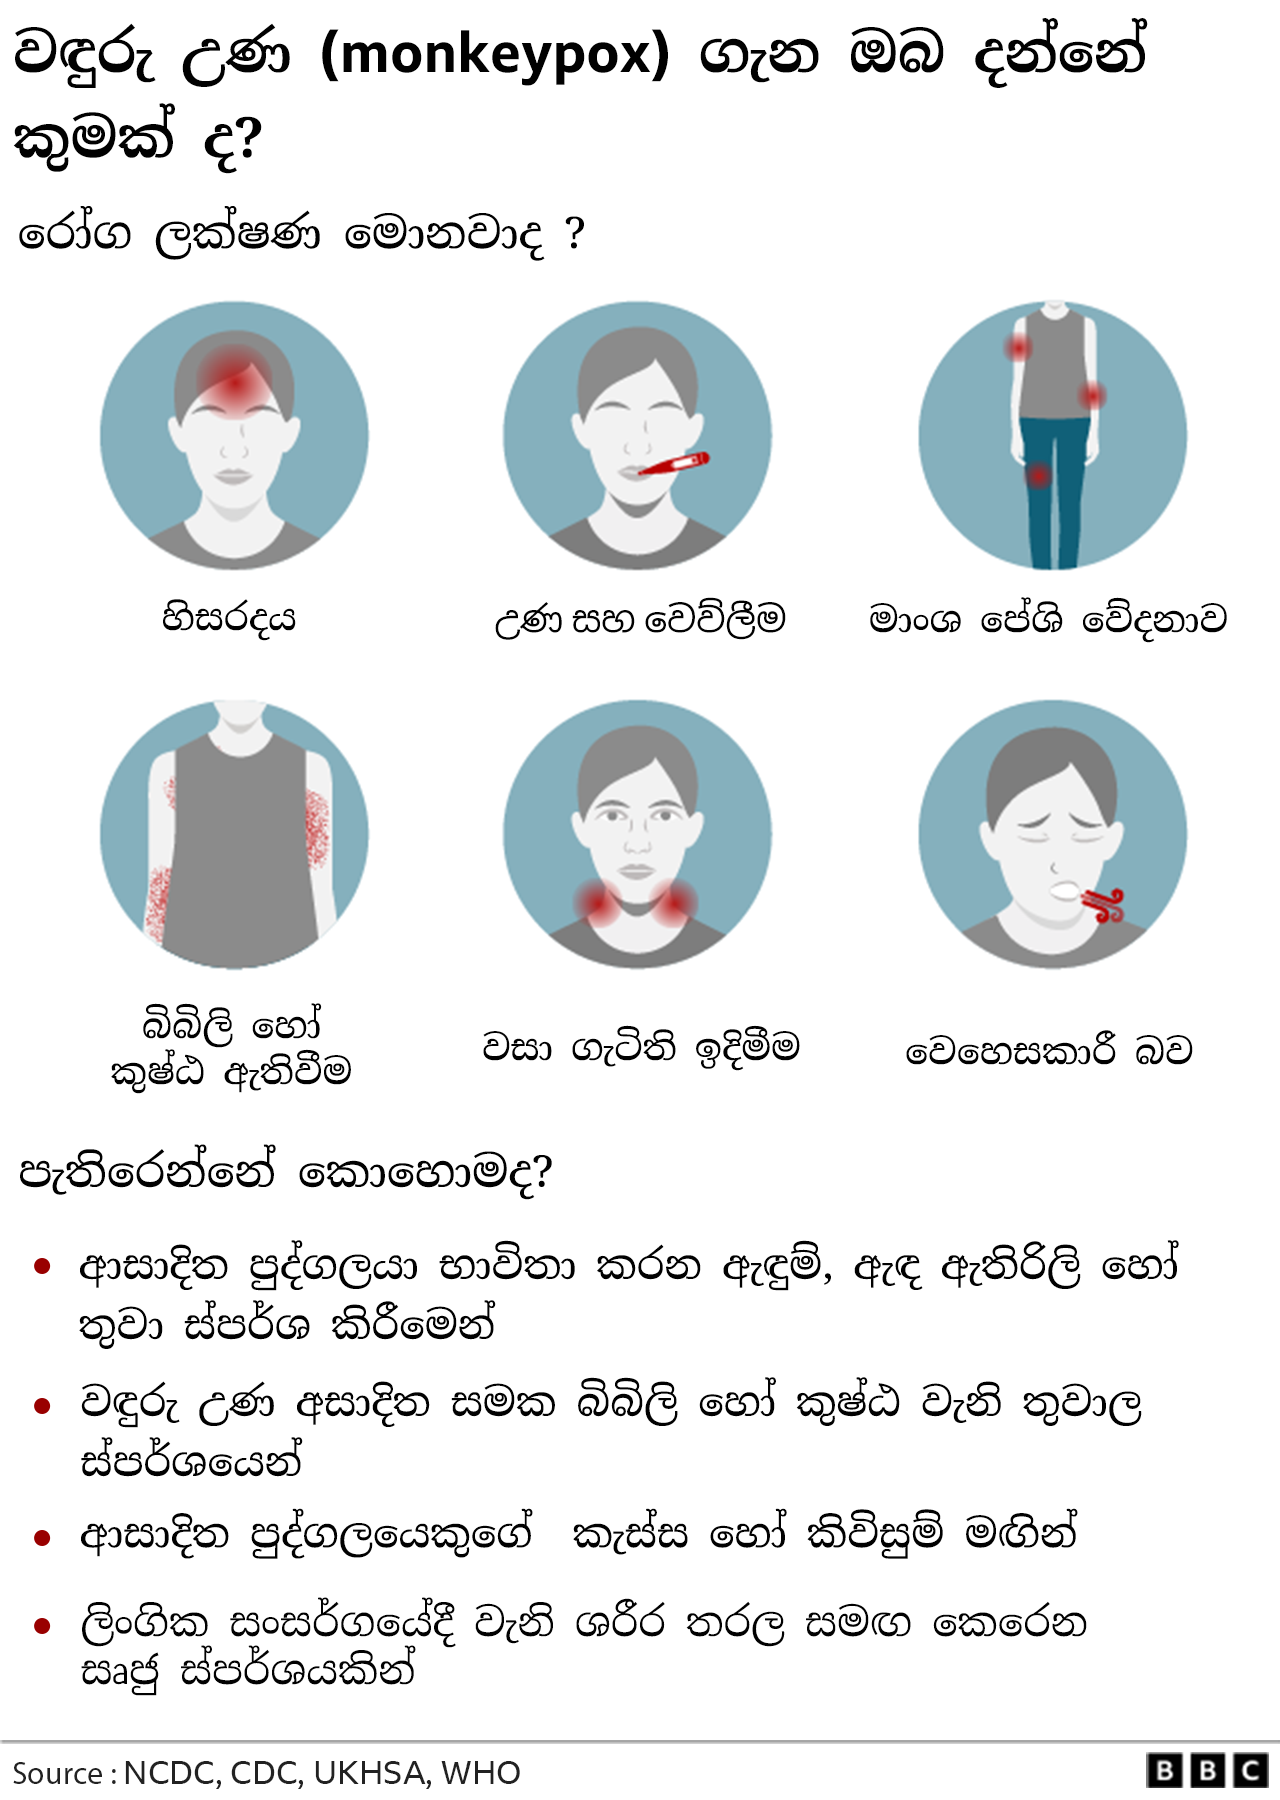 Monkeypox symptoms in Sinhalese language